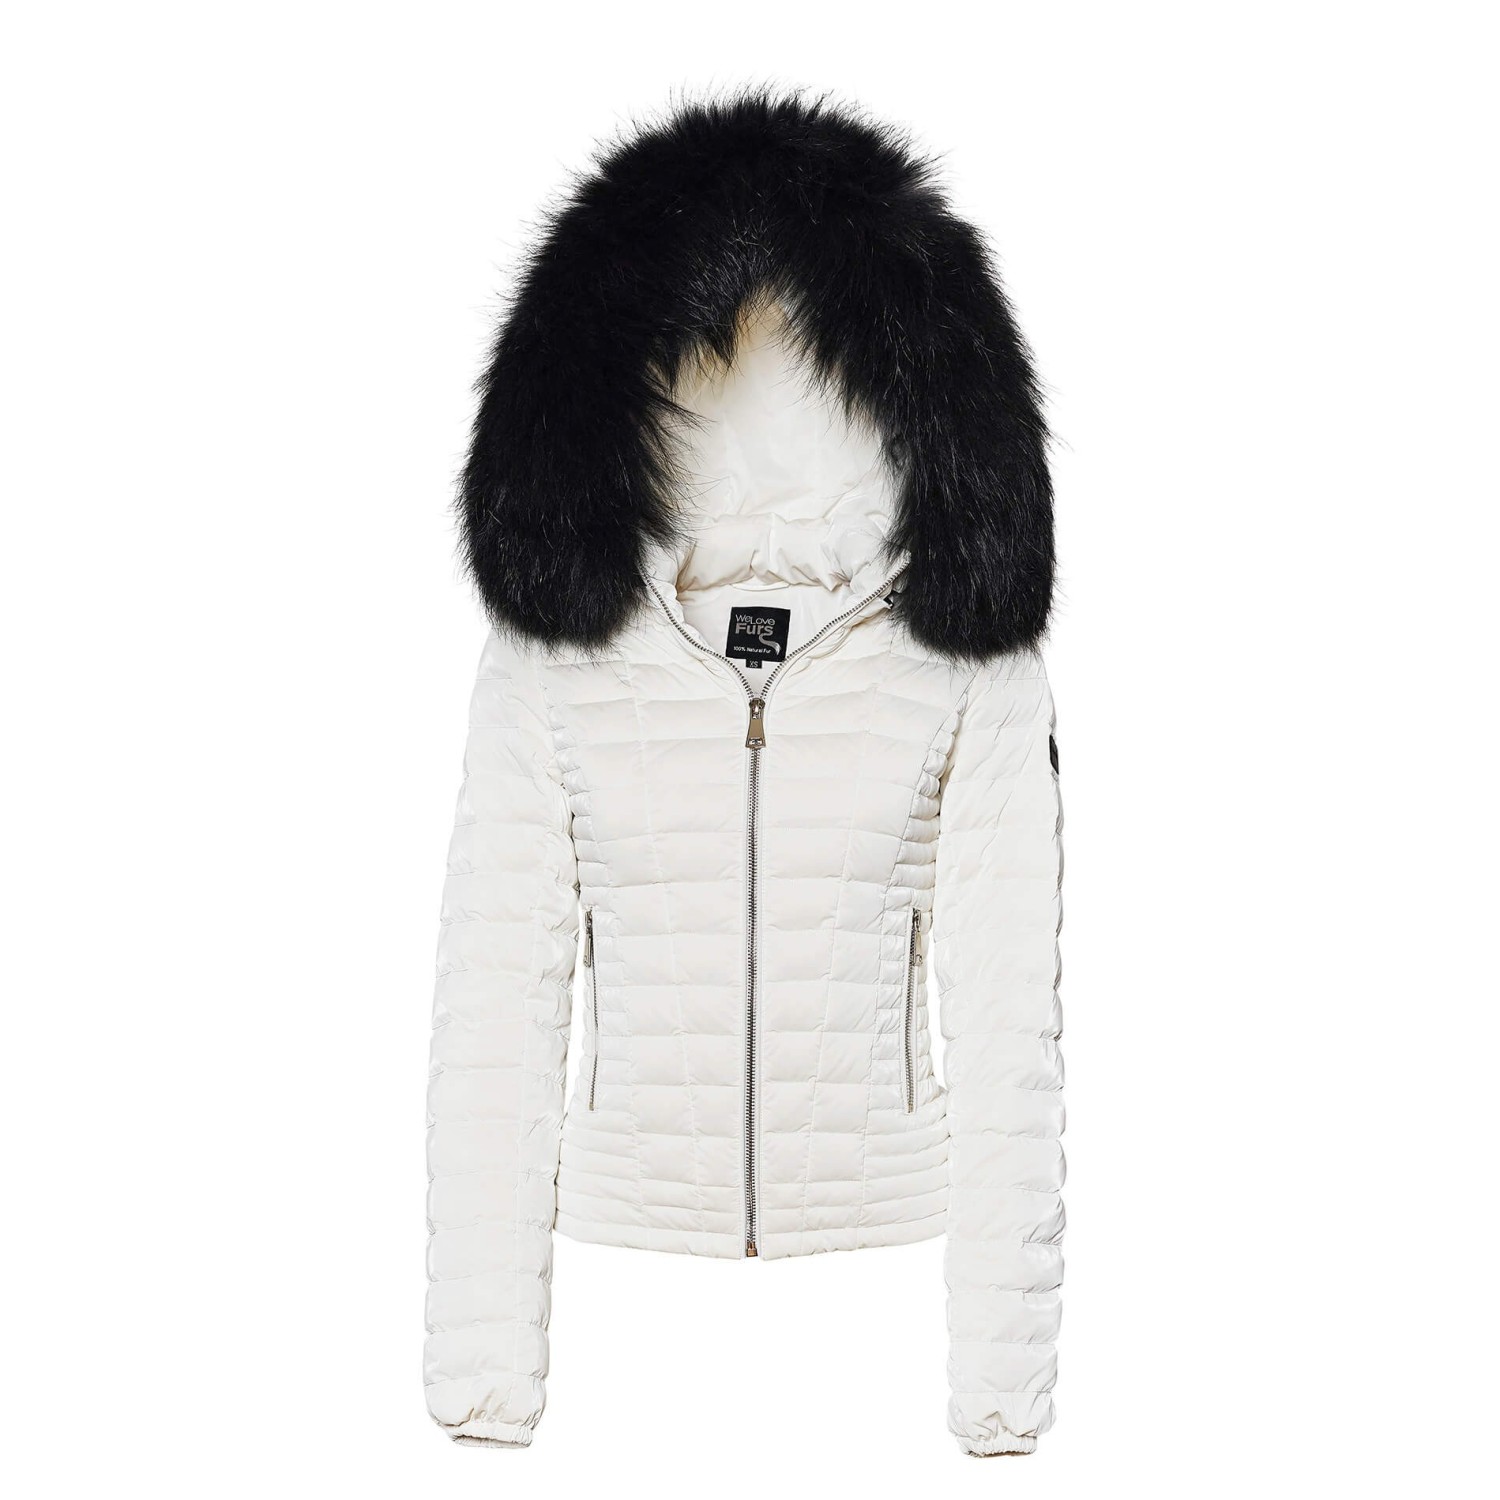 White jacket with fur “WhiteGold”,Winterjacket, Downcoat, Downjacket,  Girlsjacket, Furjacket, cosy, Real Fur, Fur Collar